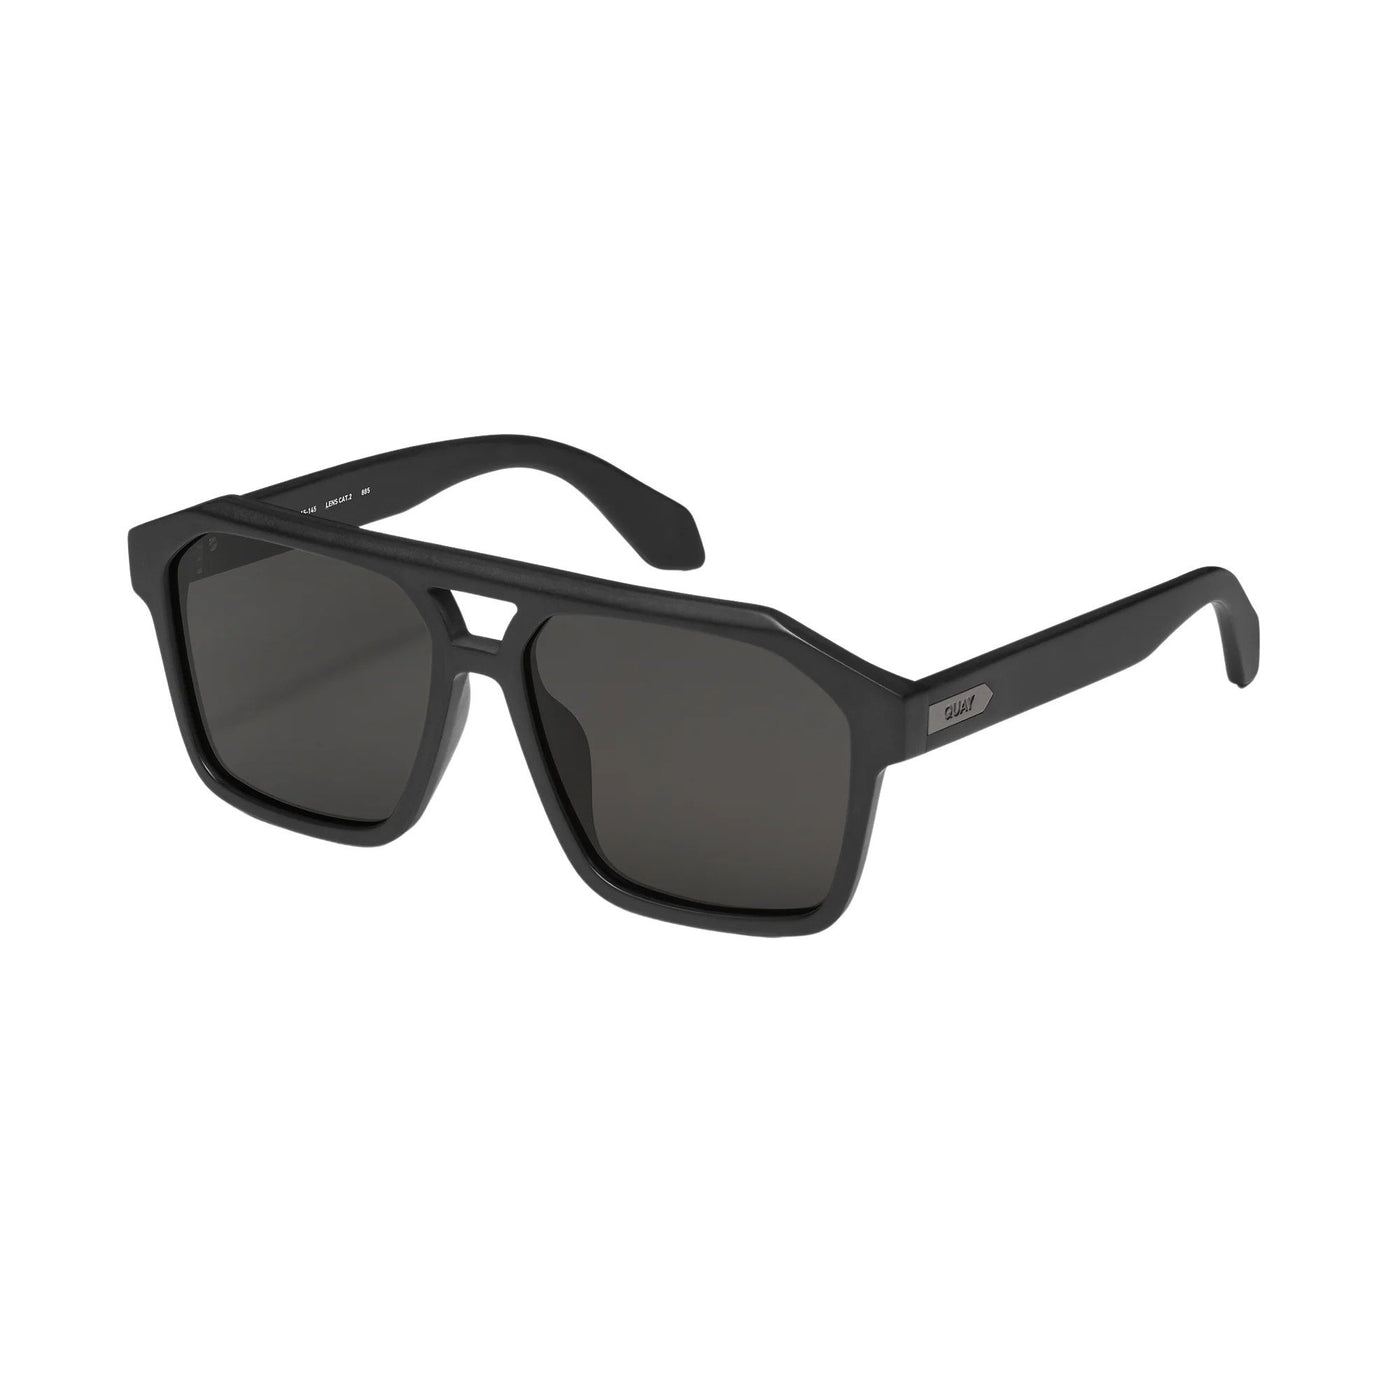 Quay Women's Soundcheck Modern Aviator Sunglasses (Matte Black Frame/Black Polarized Lens) - 3/4 View